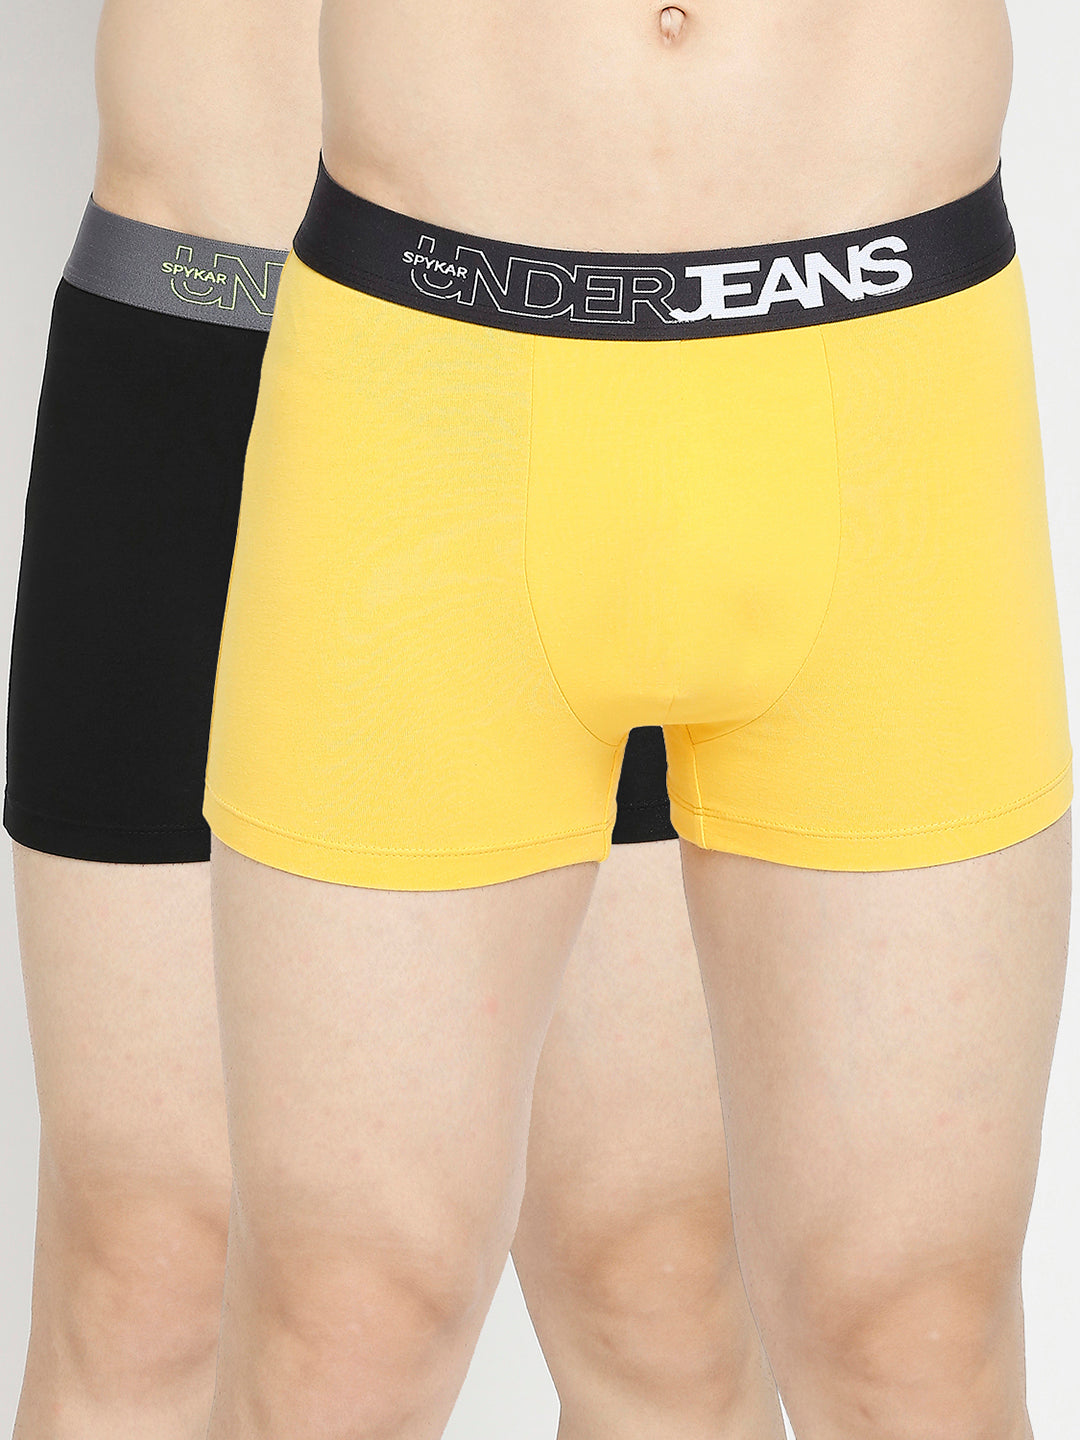 Men Premium Yellow & Black Cotton Blend Trunk - Pack Of 2- UnderJeans by Spykar